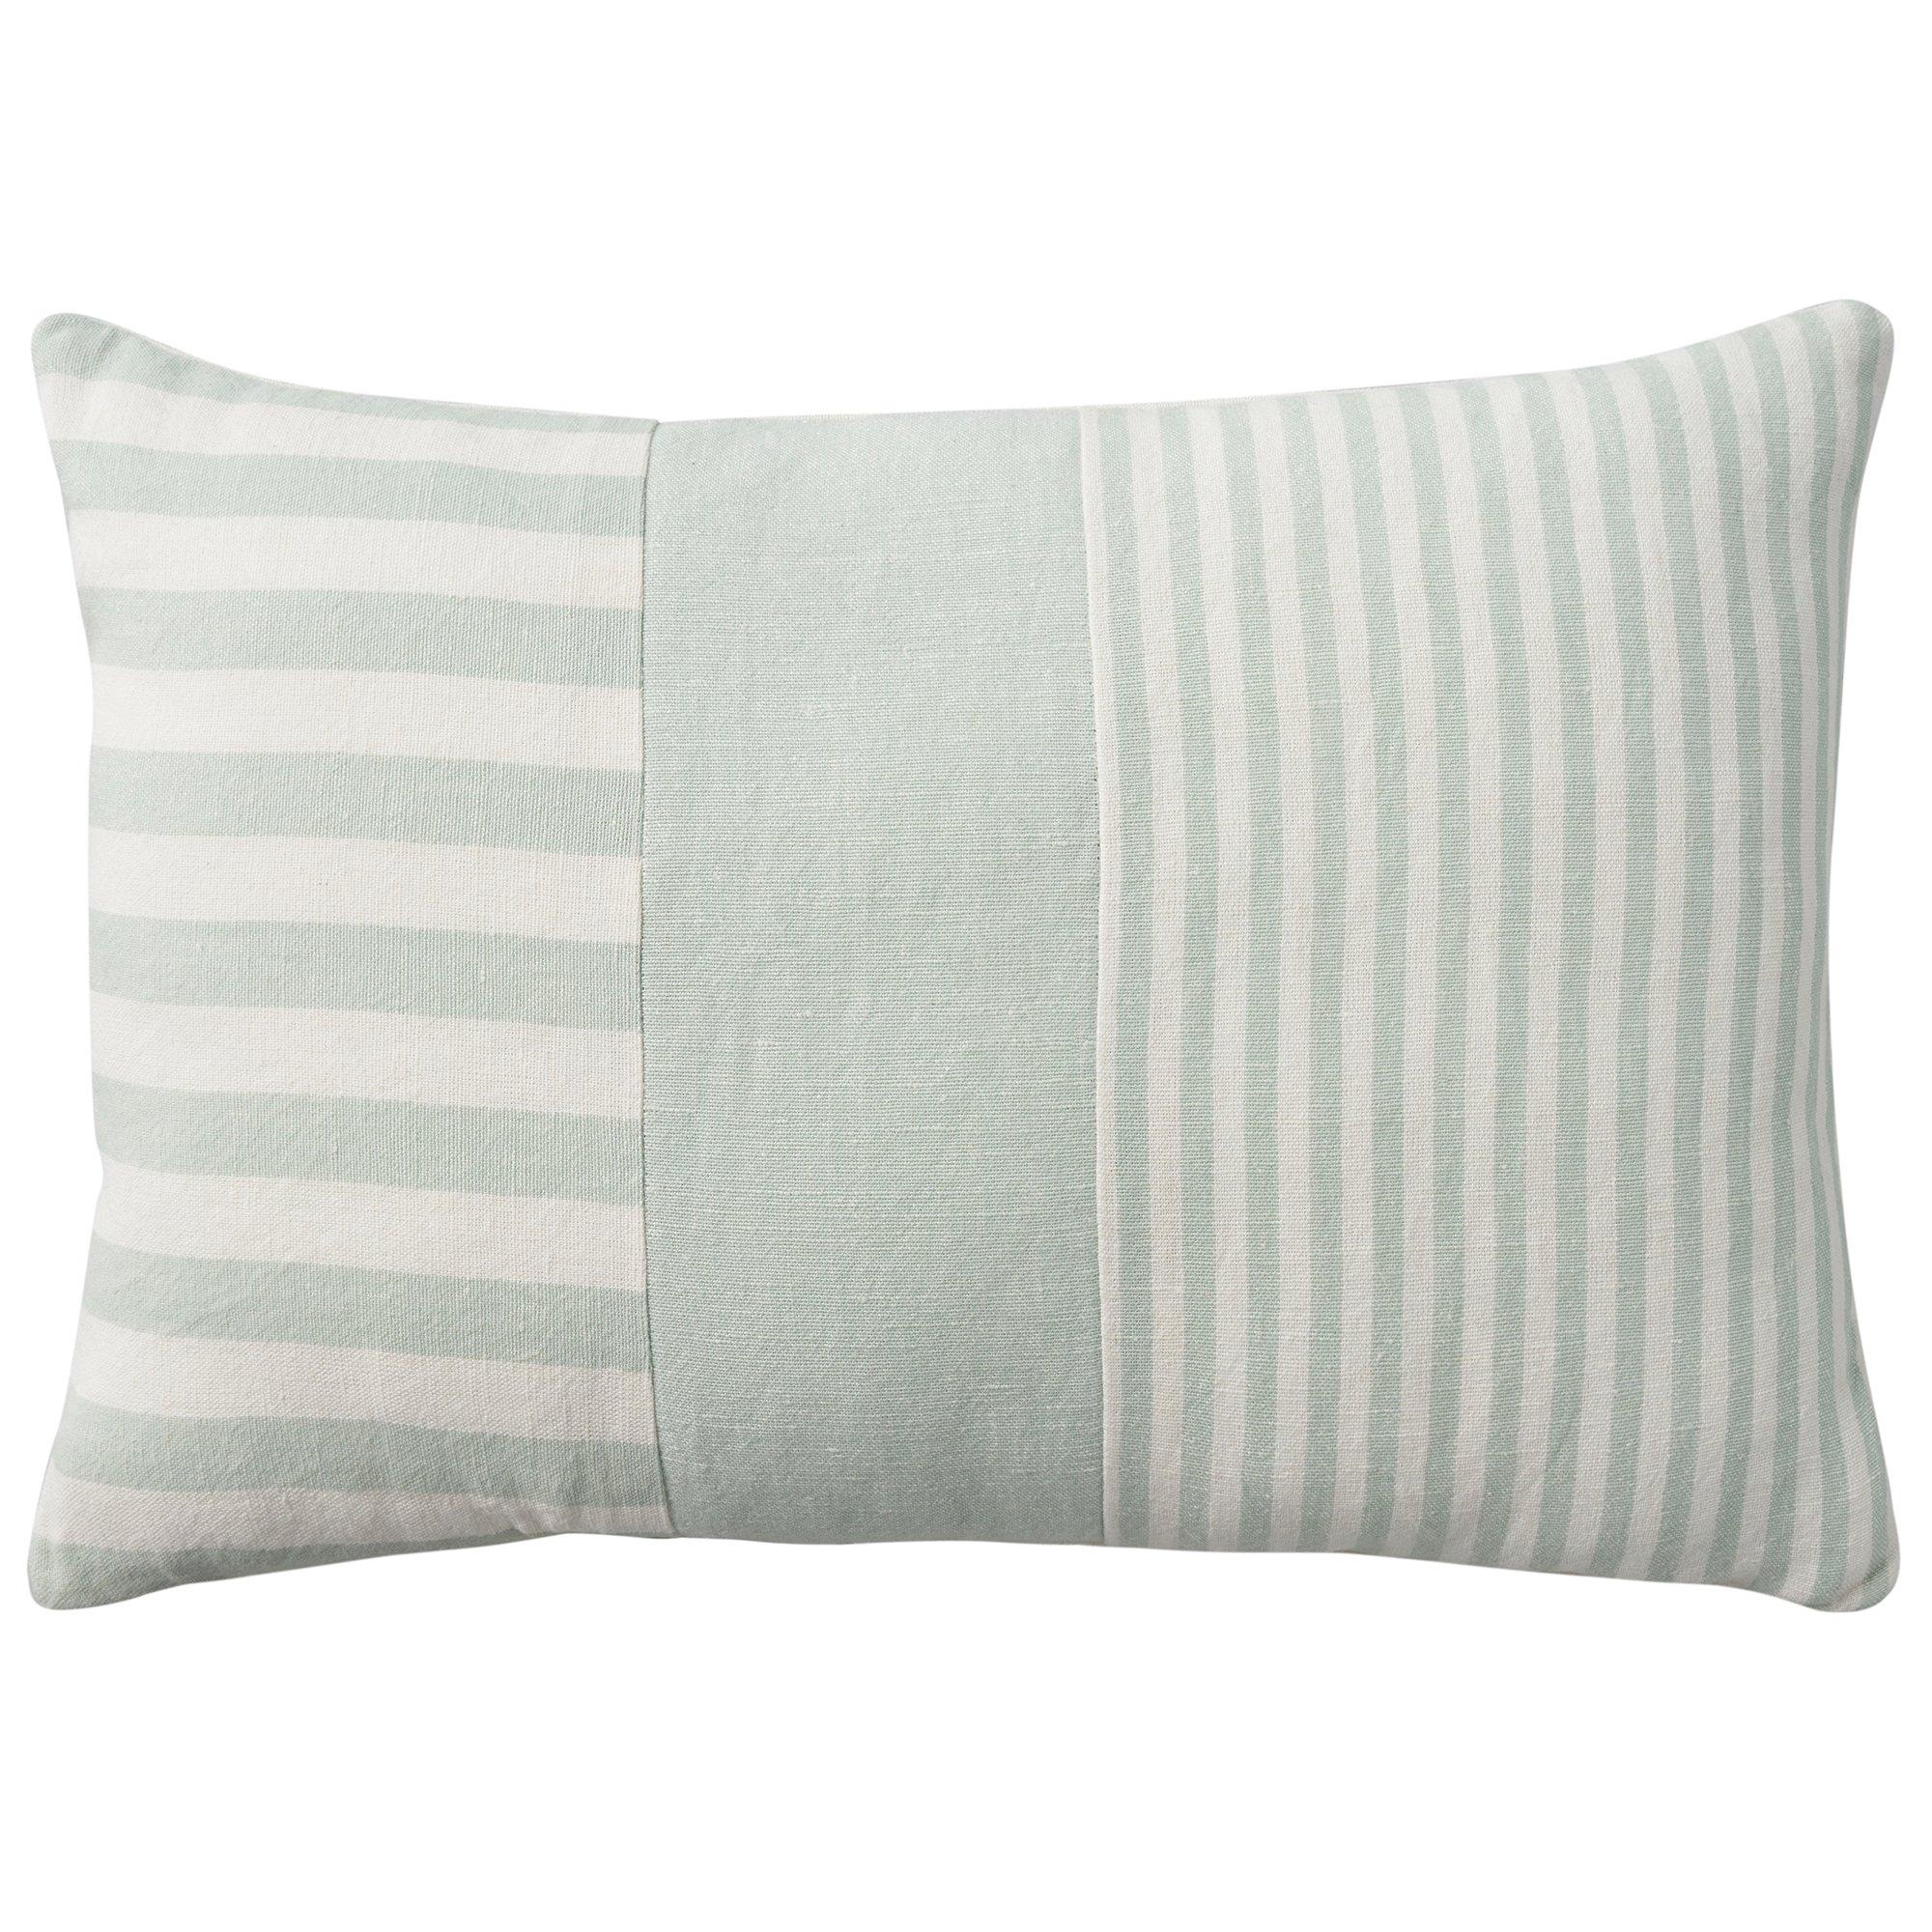 Mina Victory 14x20 Striped Decorative Pillow